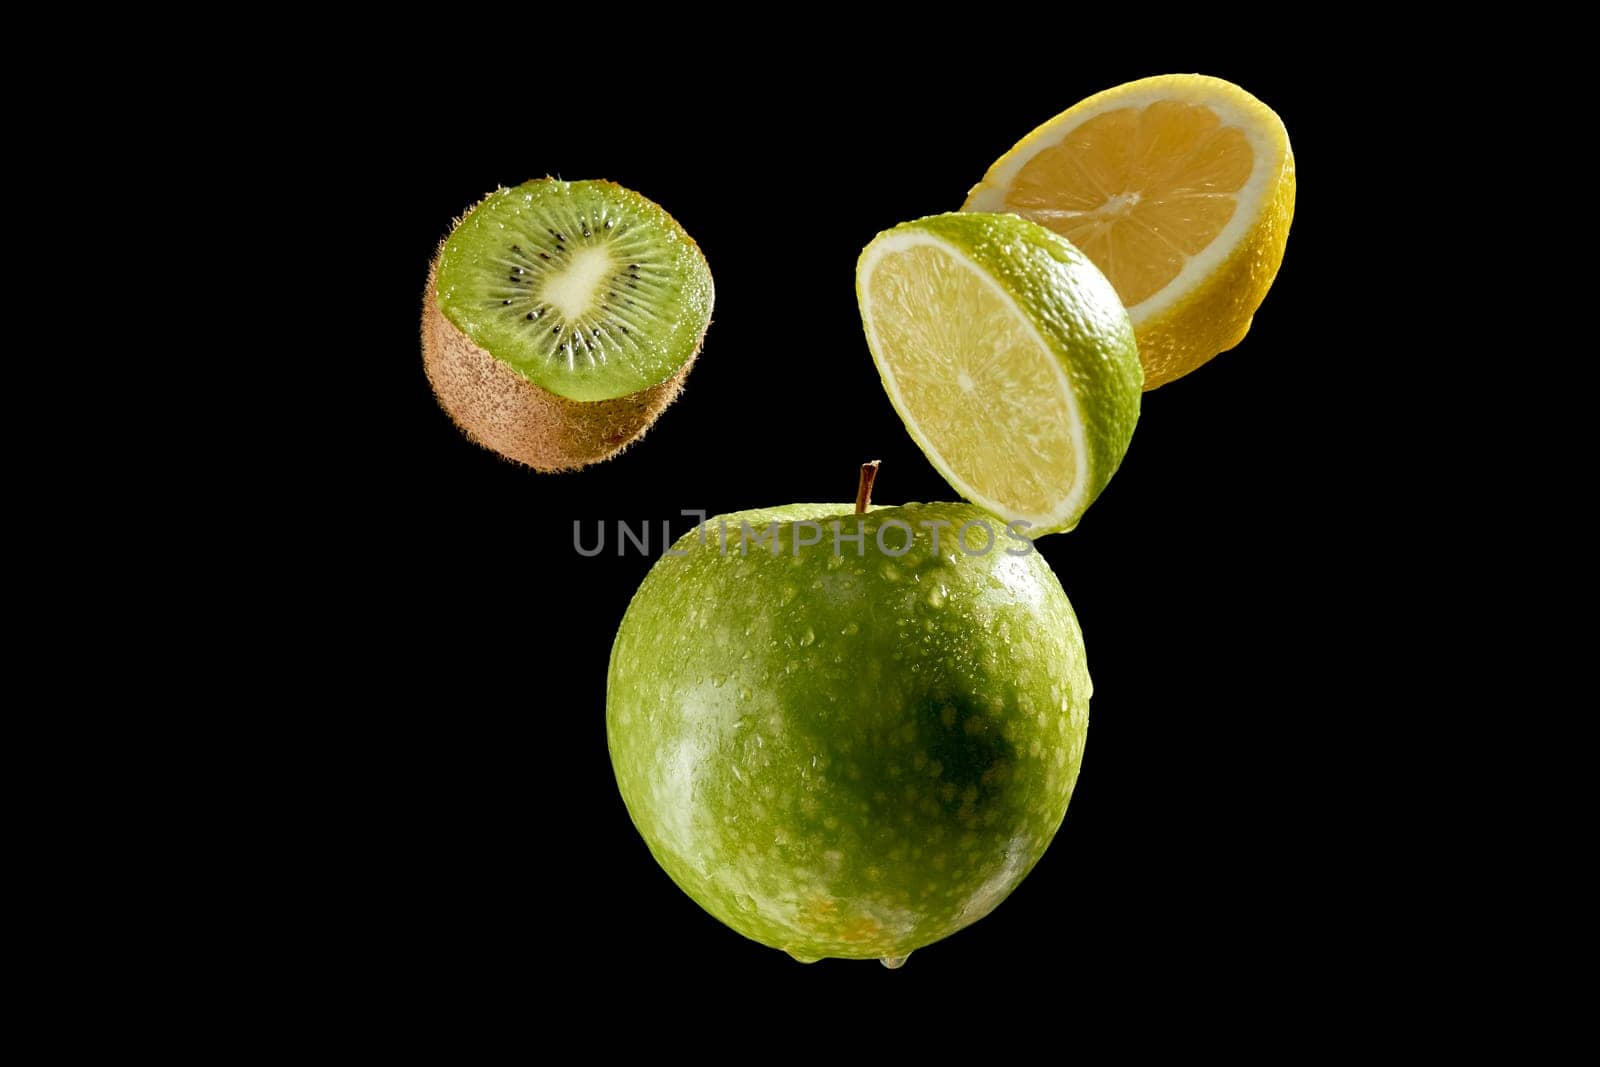 Green fresh fruits halves on black background by superstellar